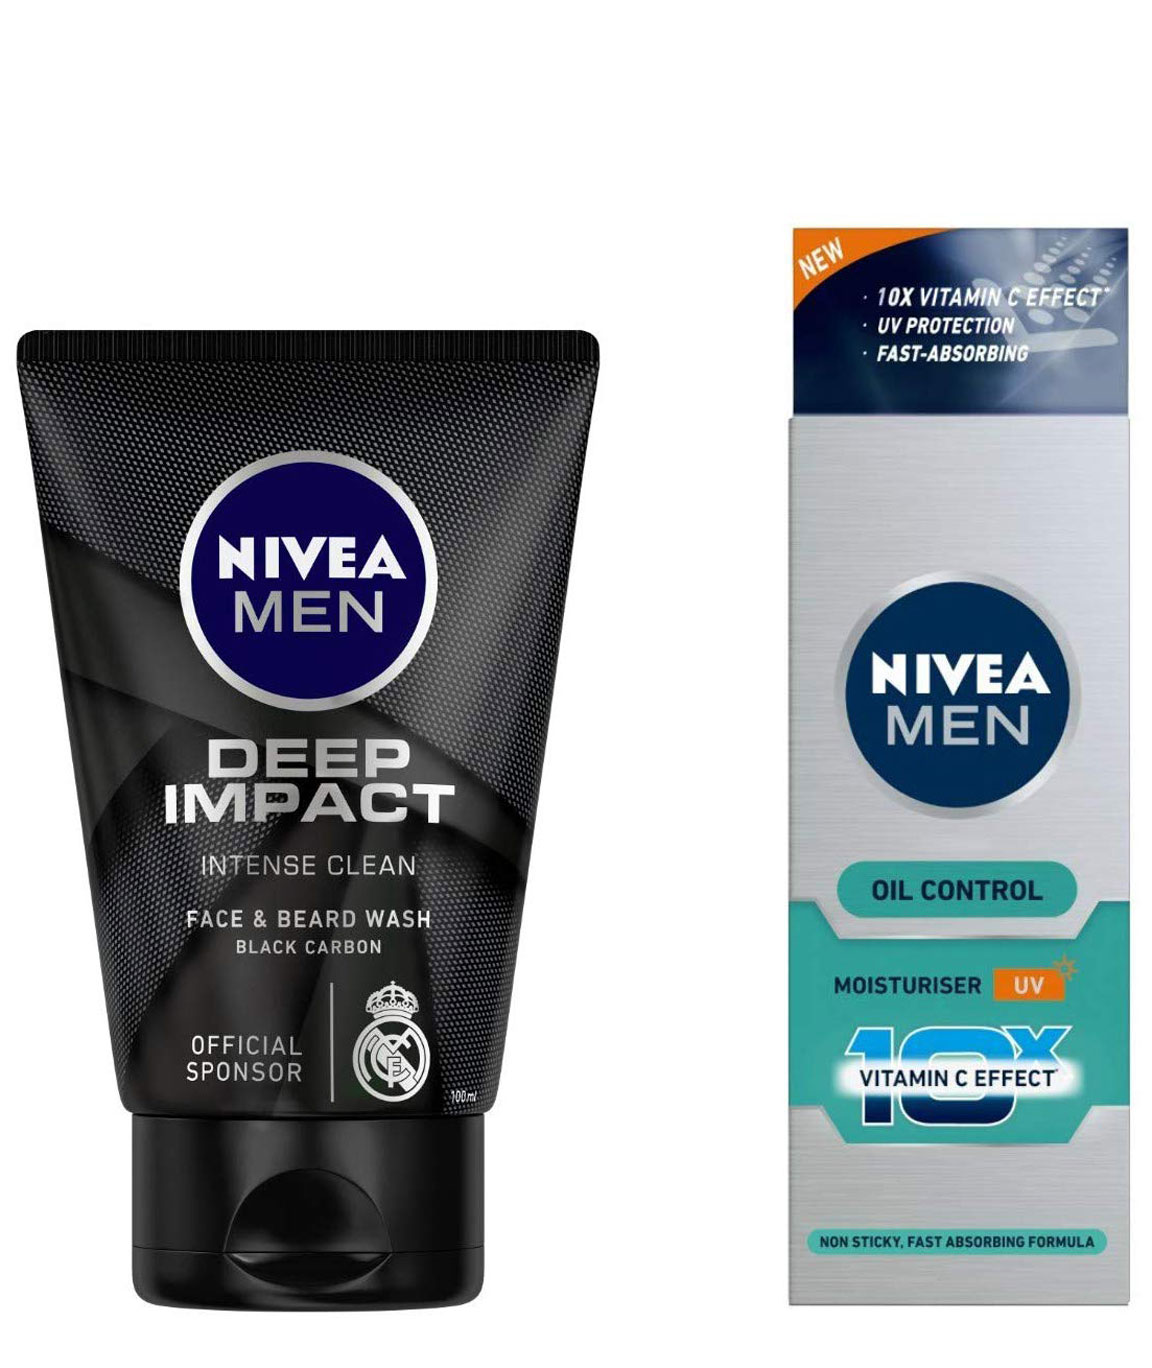 NIVEA MEN Face & Beard Wash, Deep Impact Intense Clean, 100ml and NIVEA MEN Moisturiser, Oil Control, 50ml